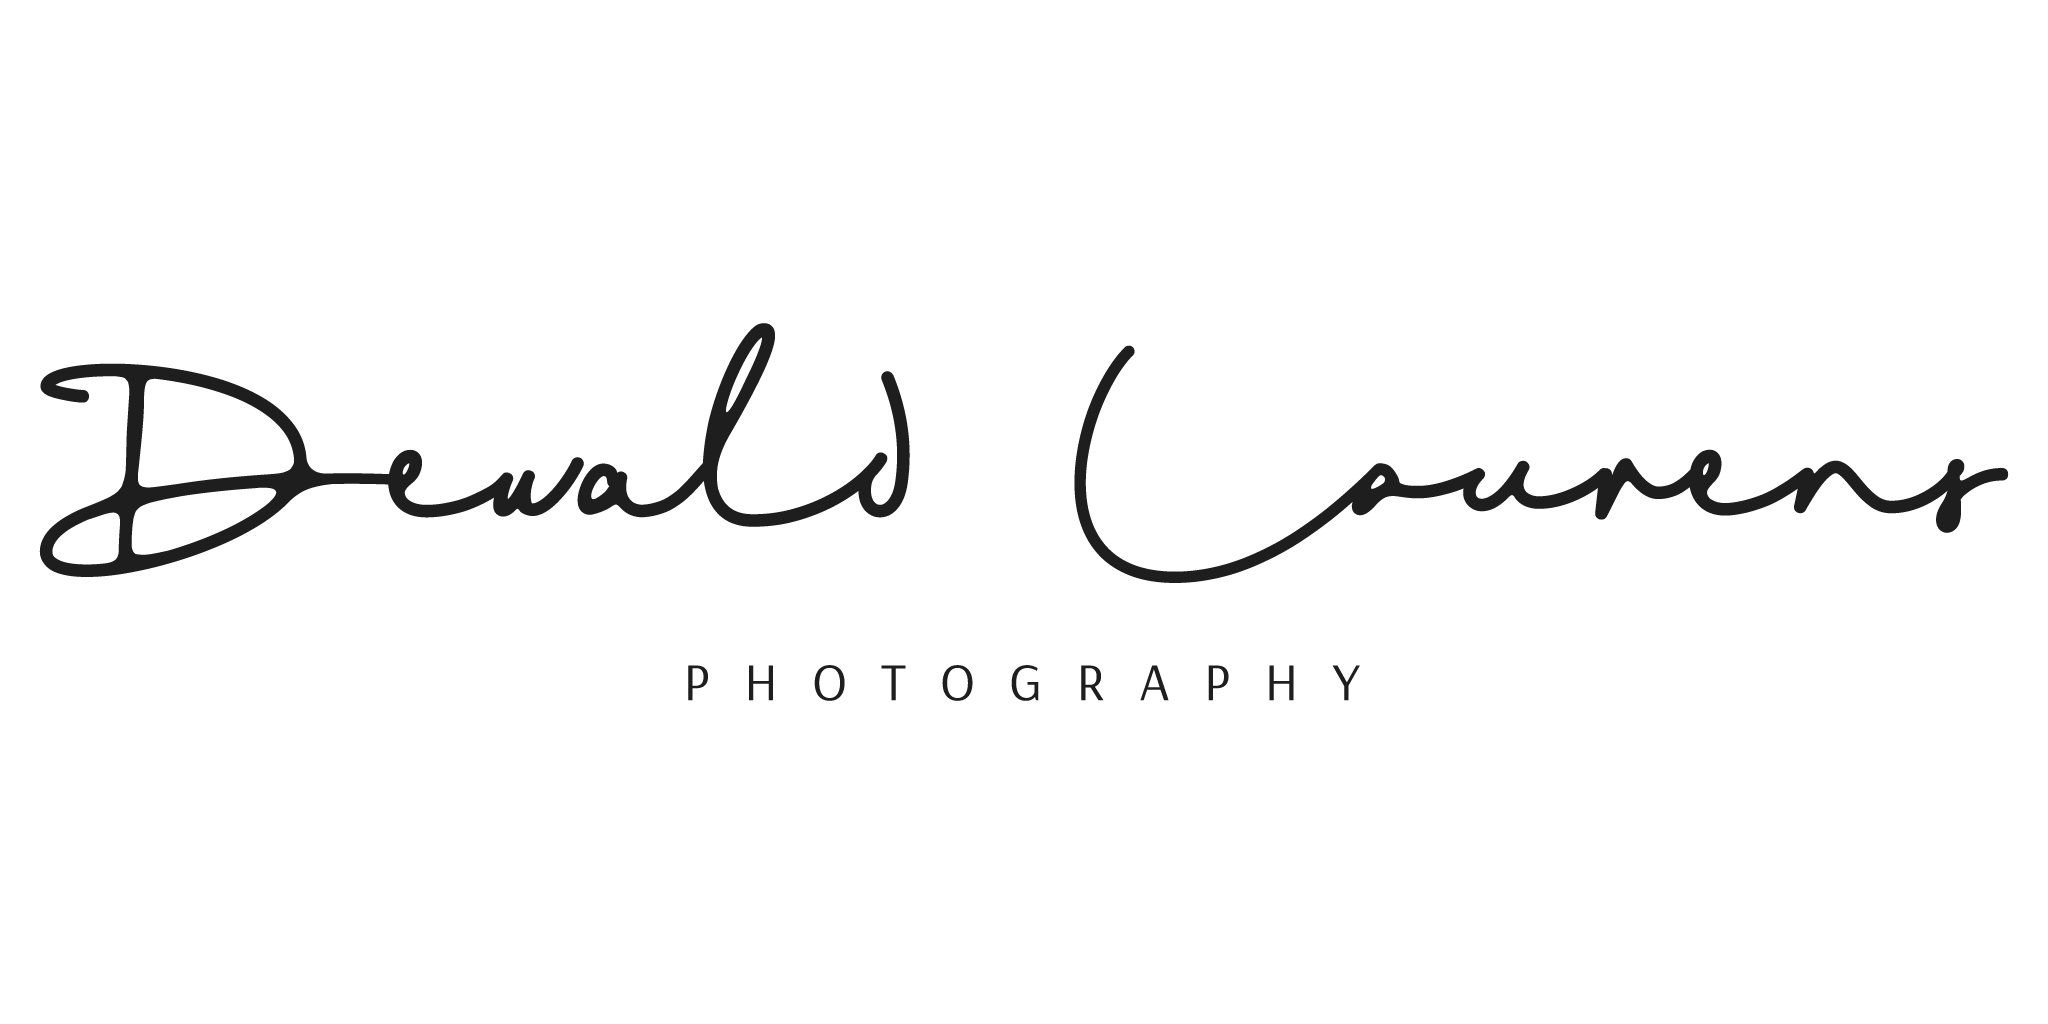 Dewald Lourens Photography